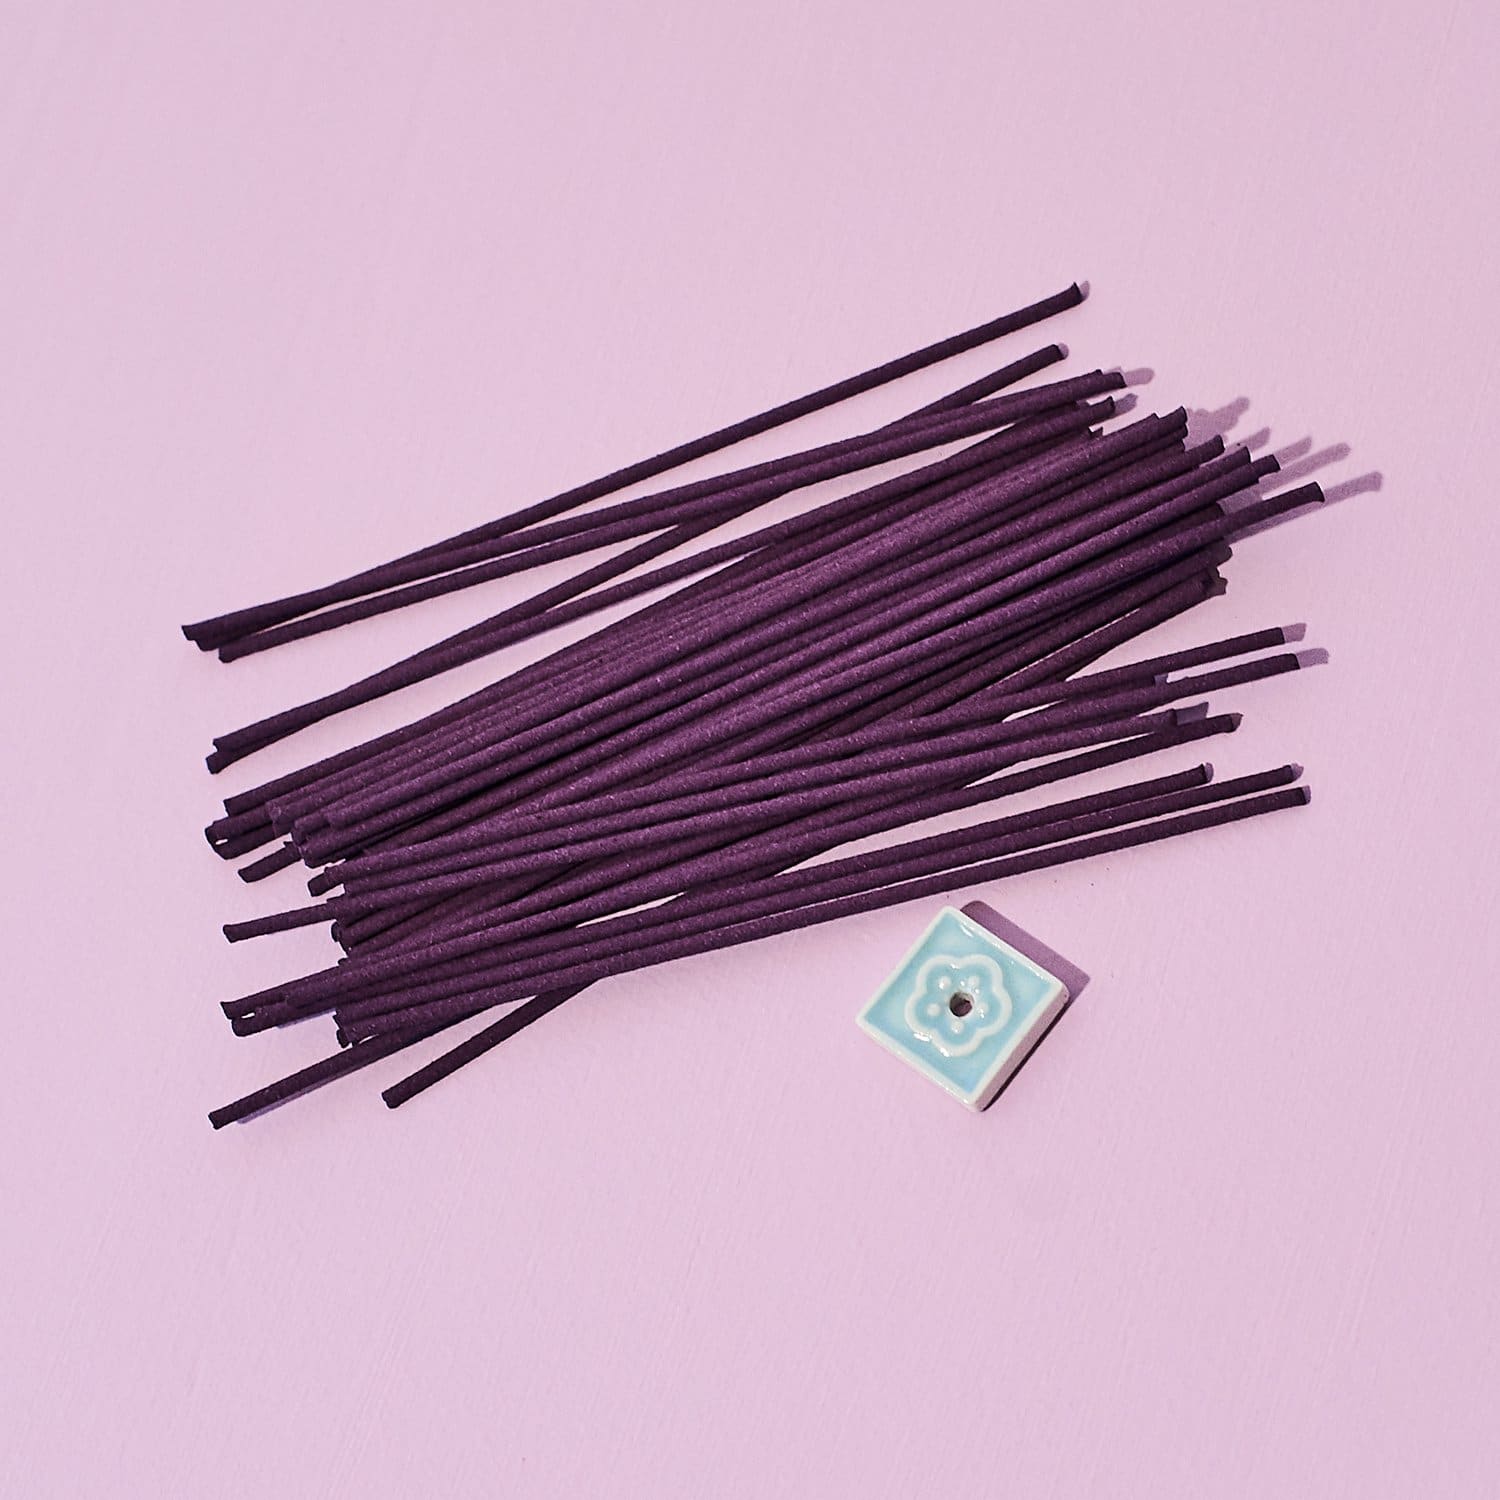 Morning Star Incense 50 Sticks - Lavender Home - Fragrance -